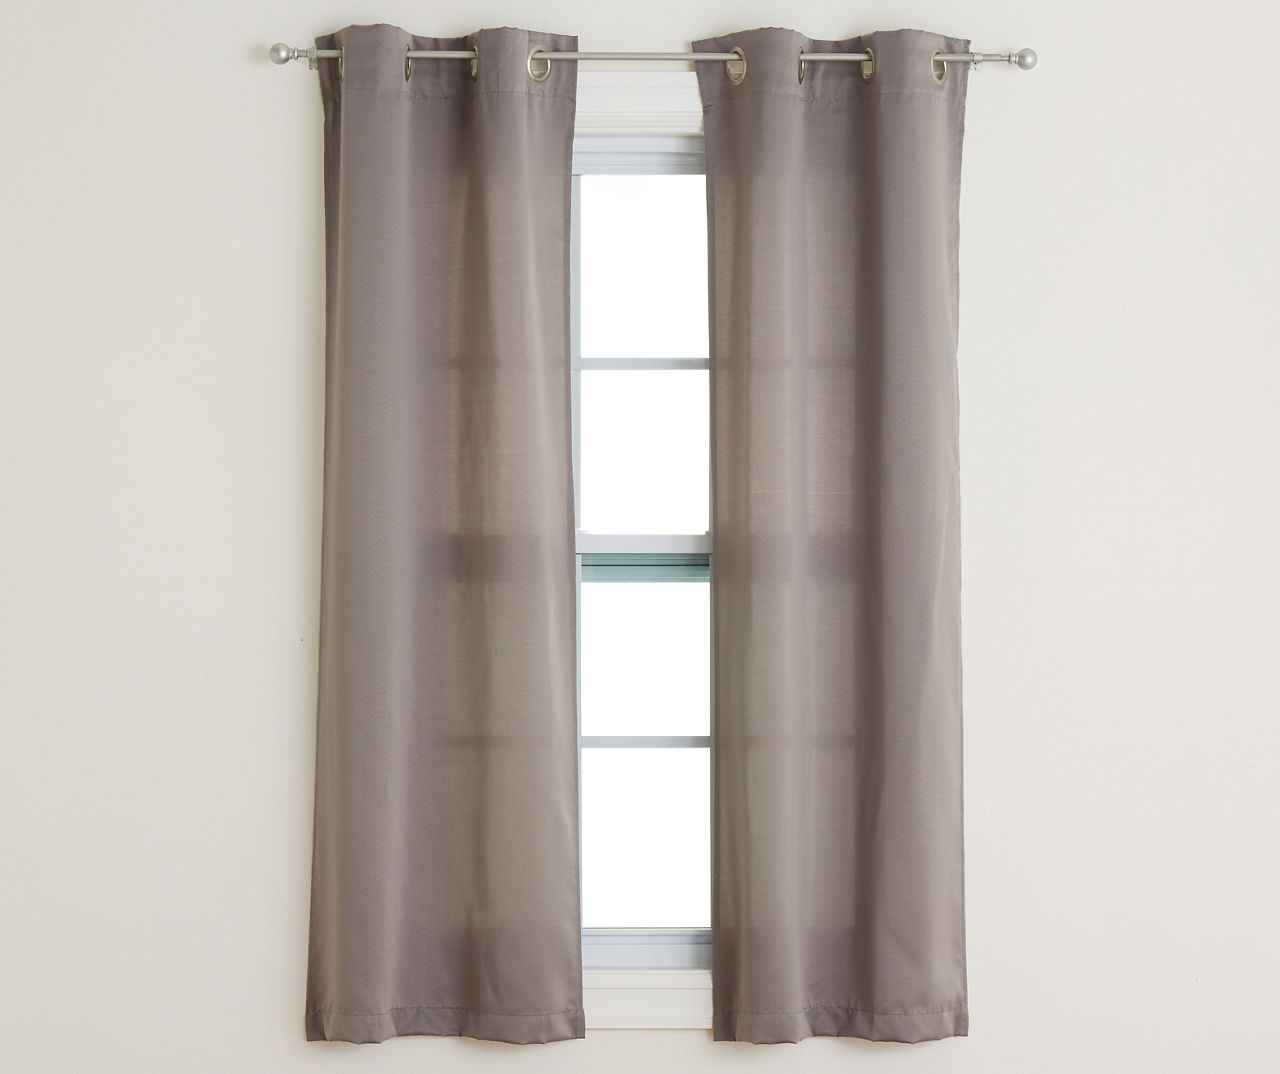 4-Piece Putnam Gray Room-Darkening Curtain Panels Set, (63")